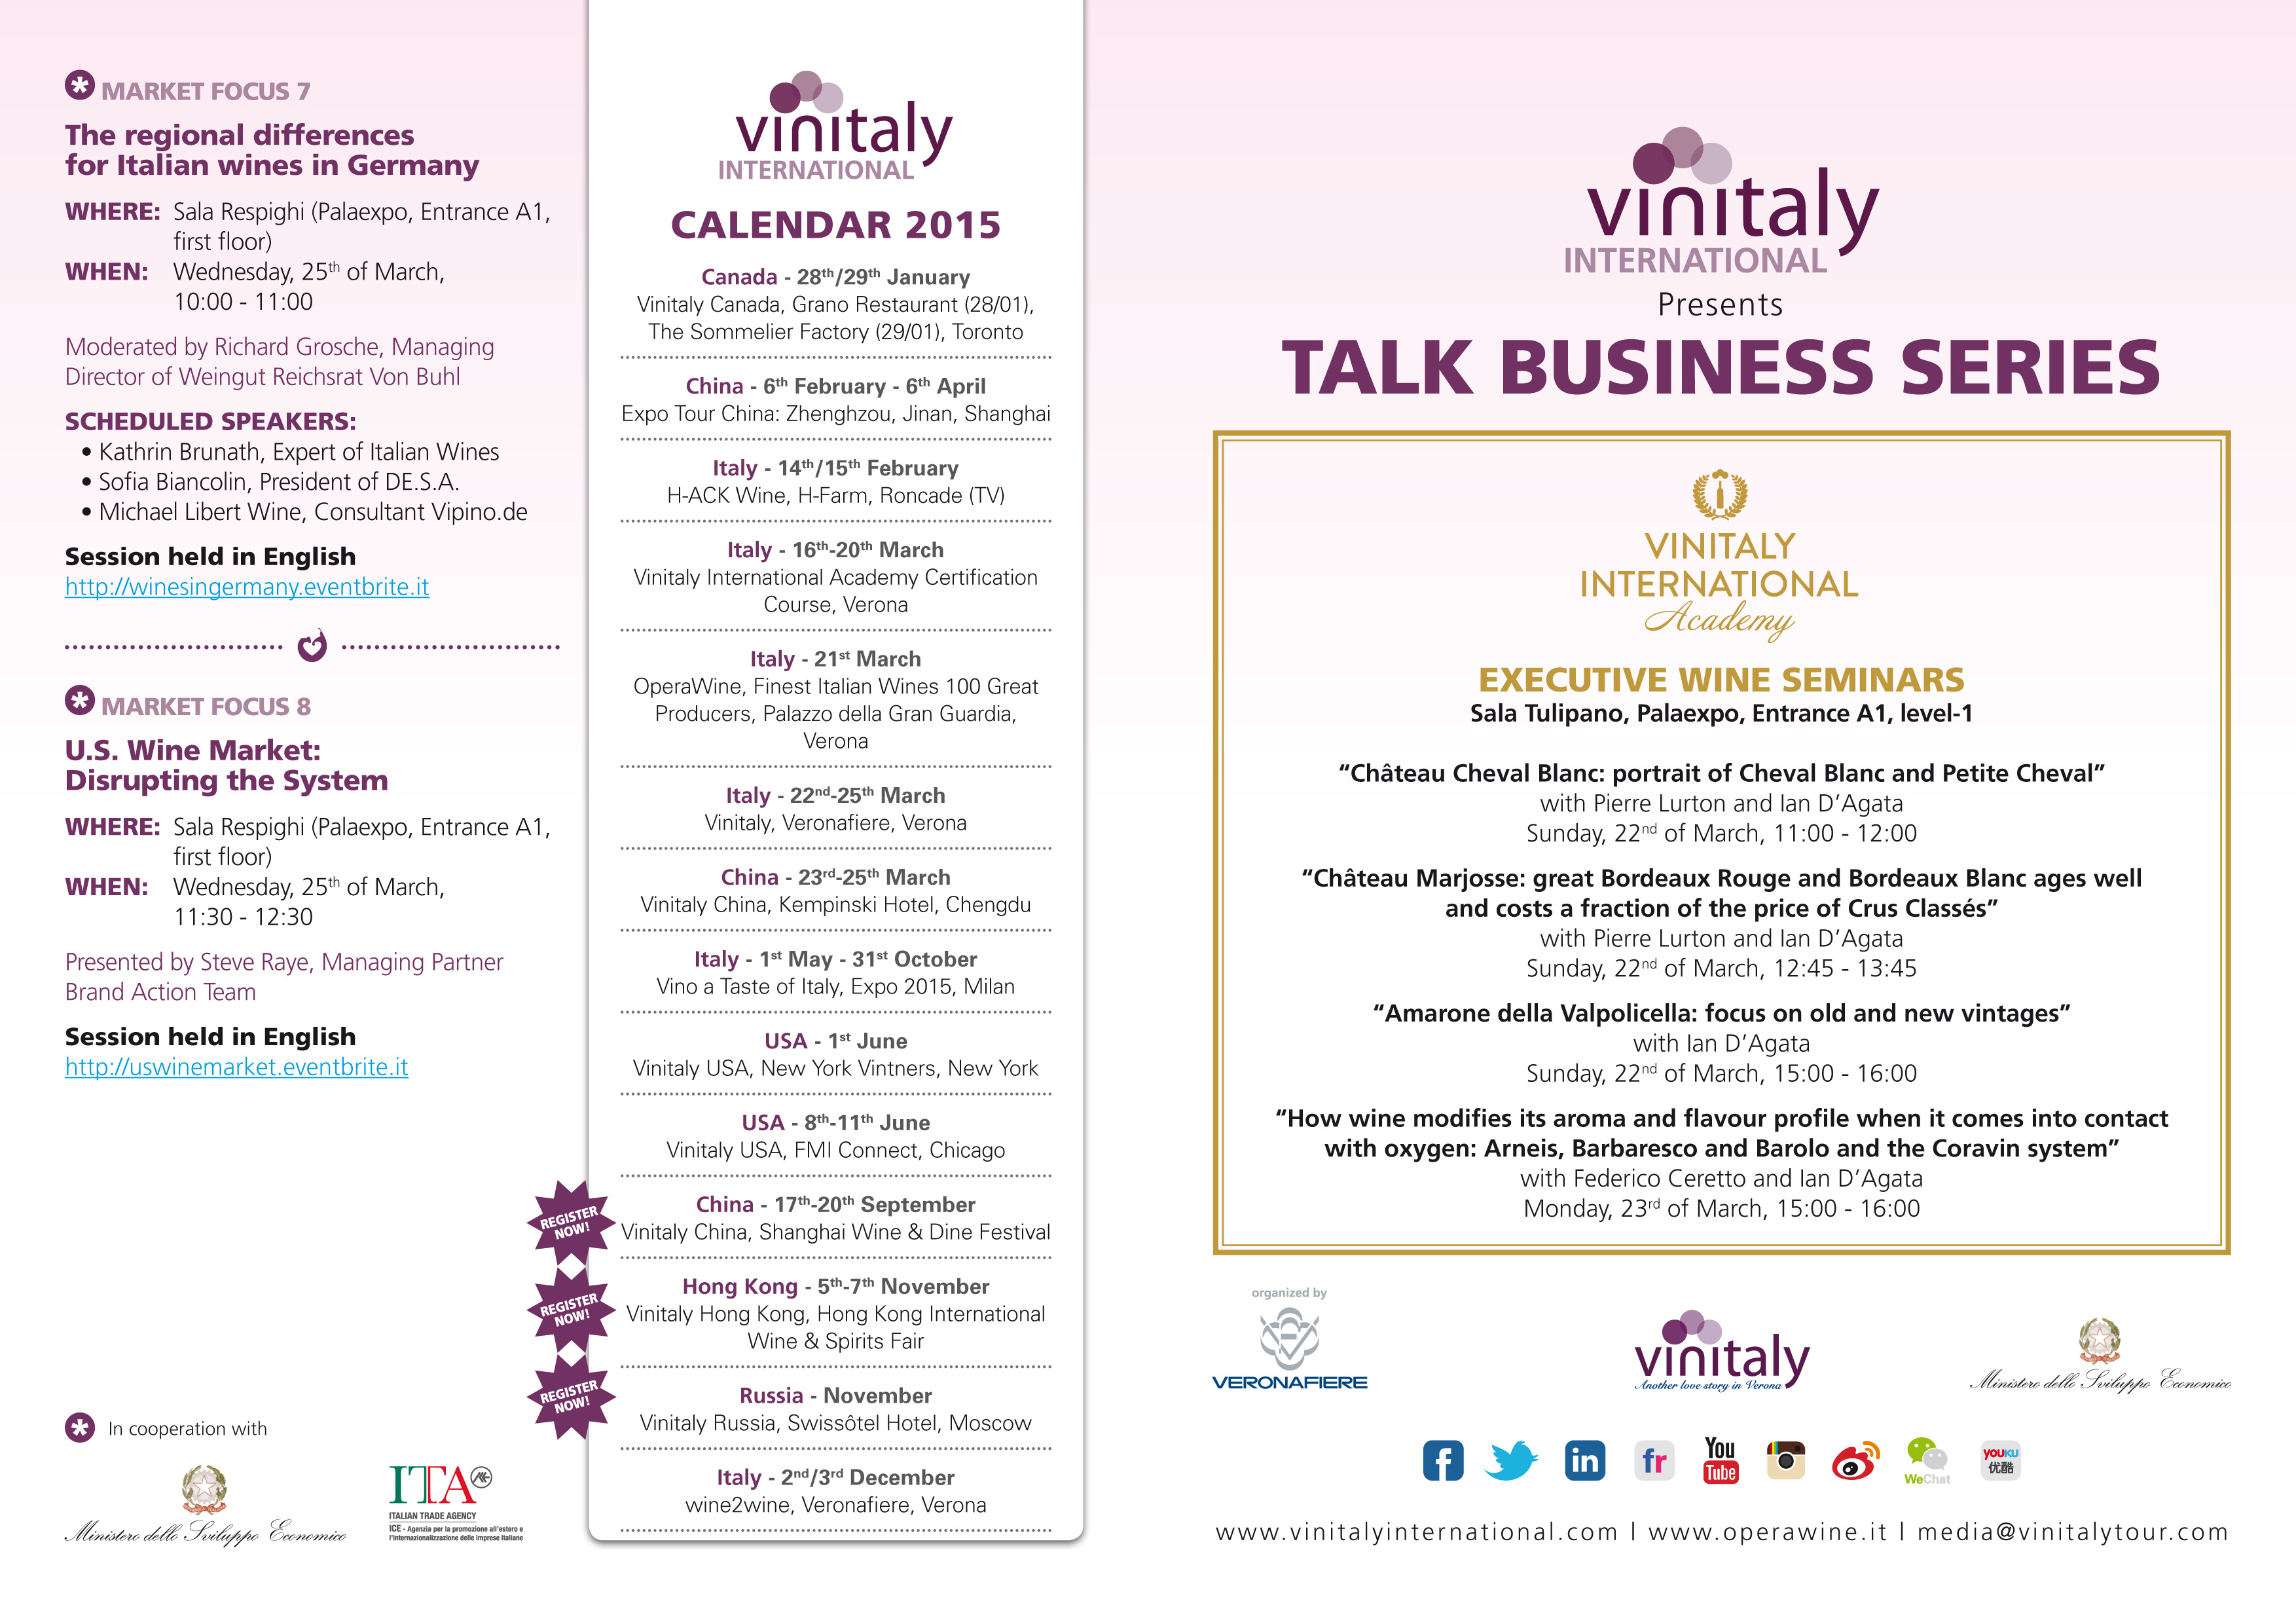 Talk Business Series at Vinitaly 2015